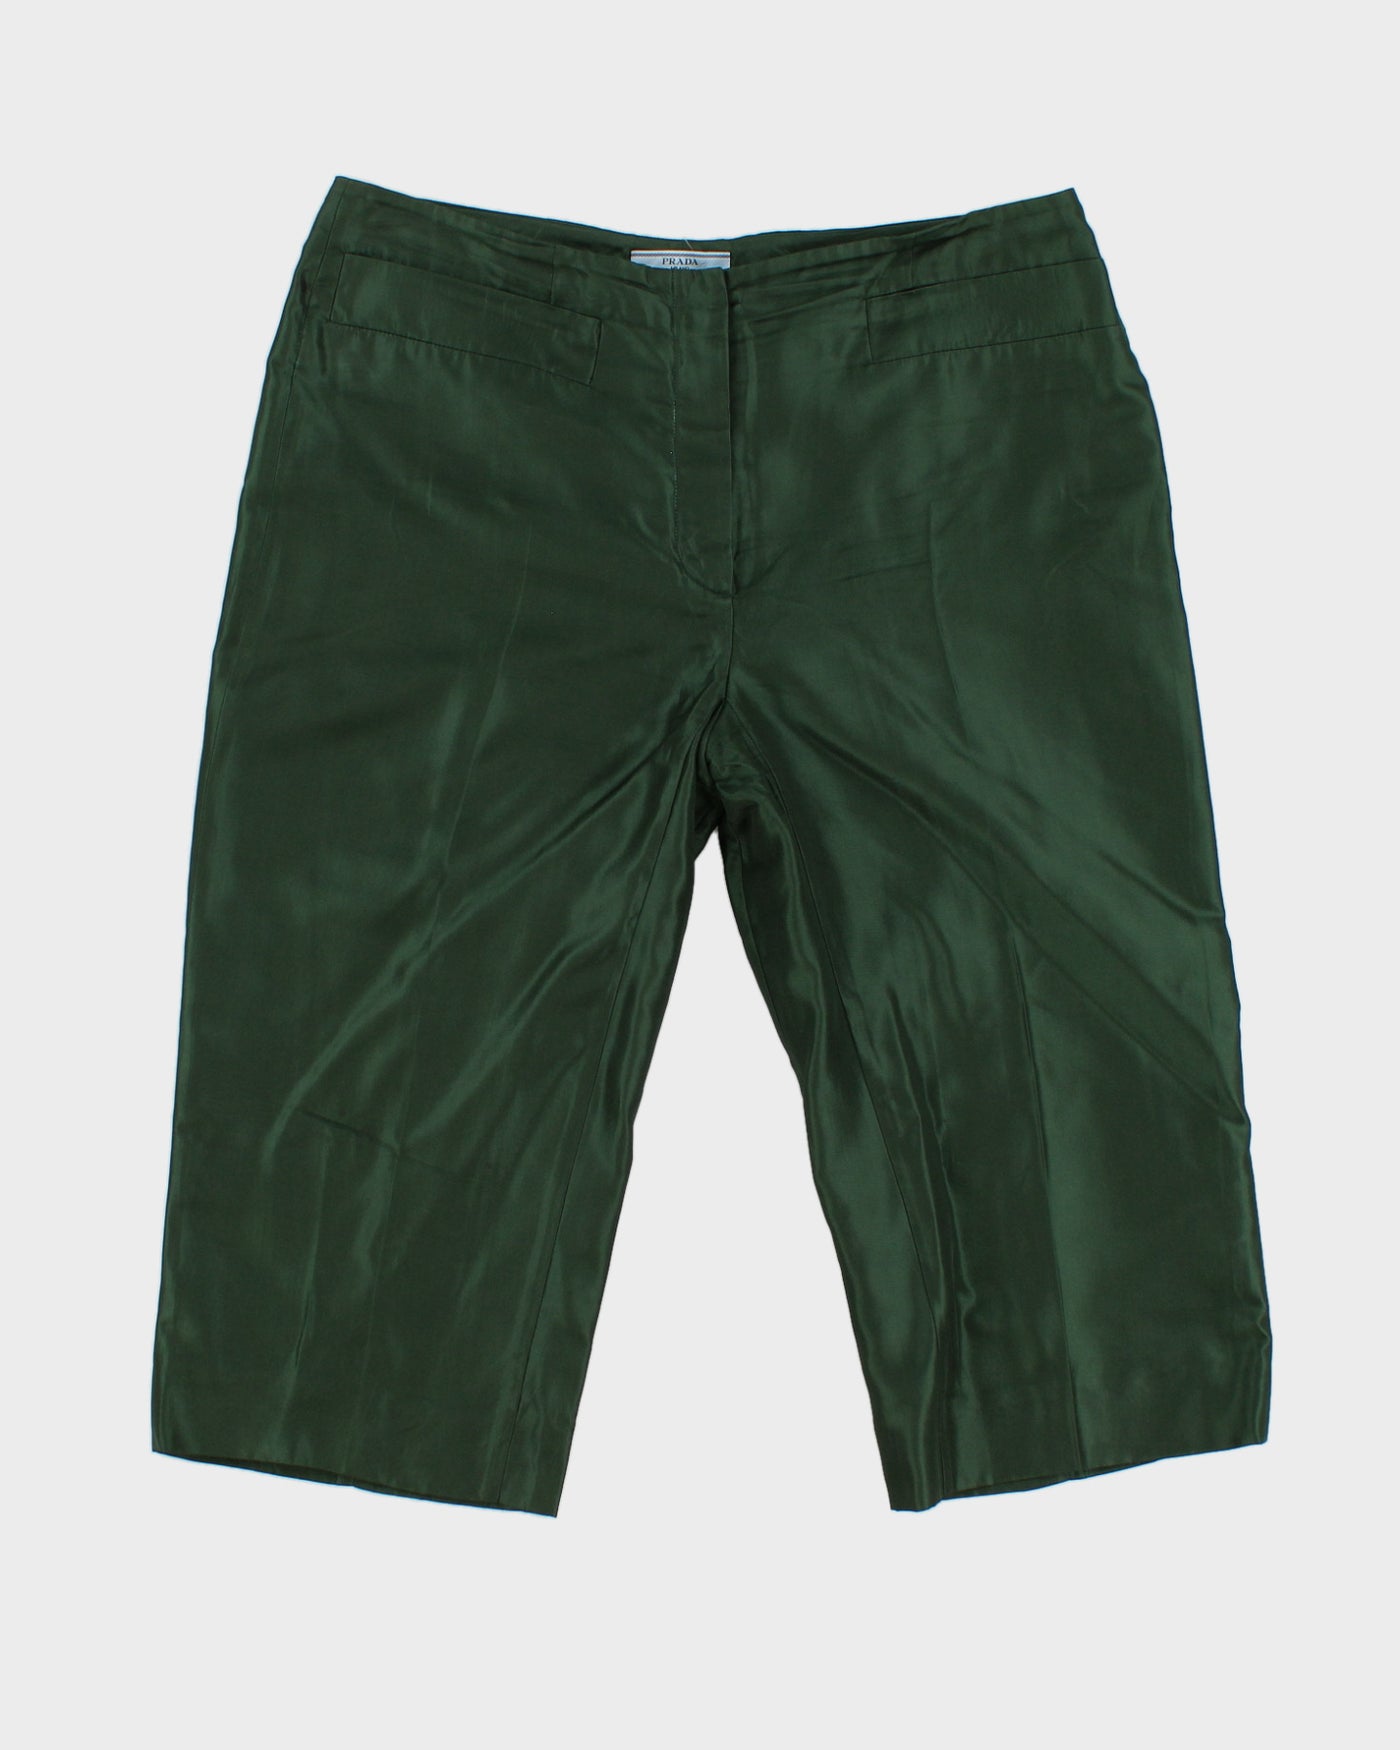 Prada Green Silk Capris Pants - W34